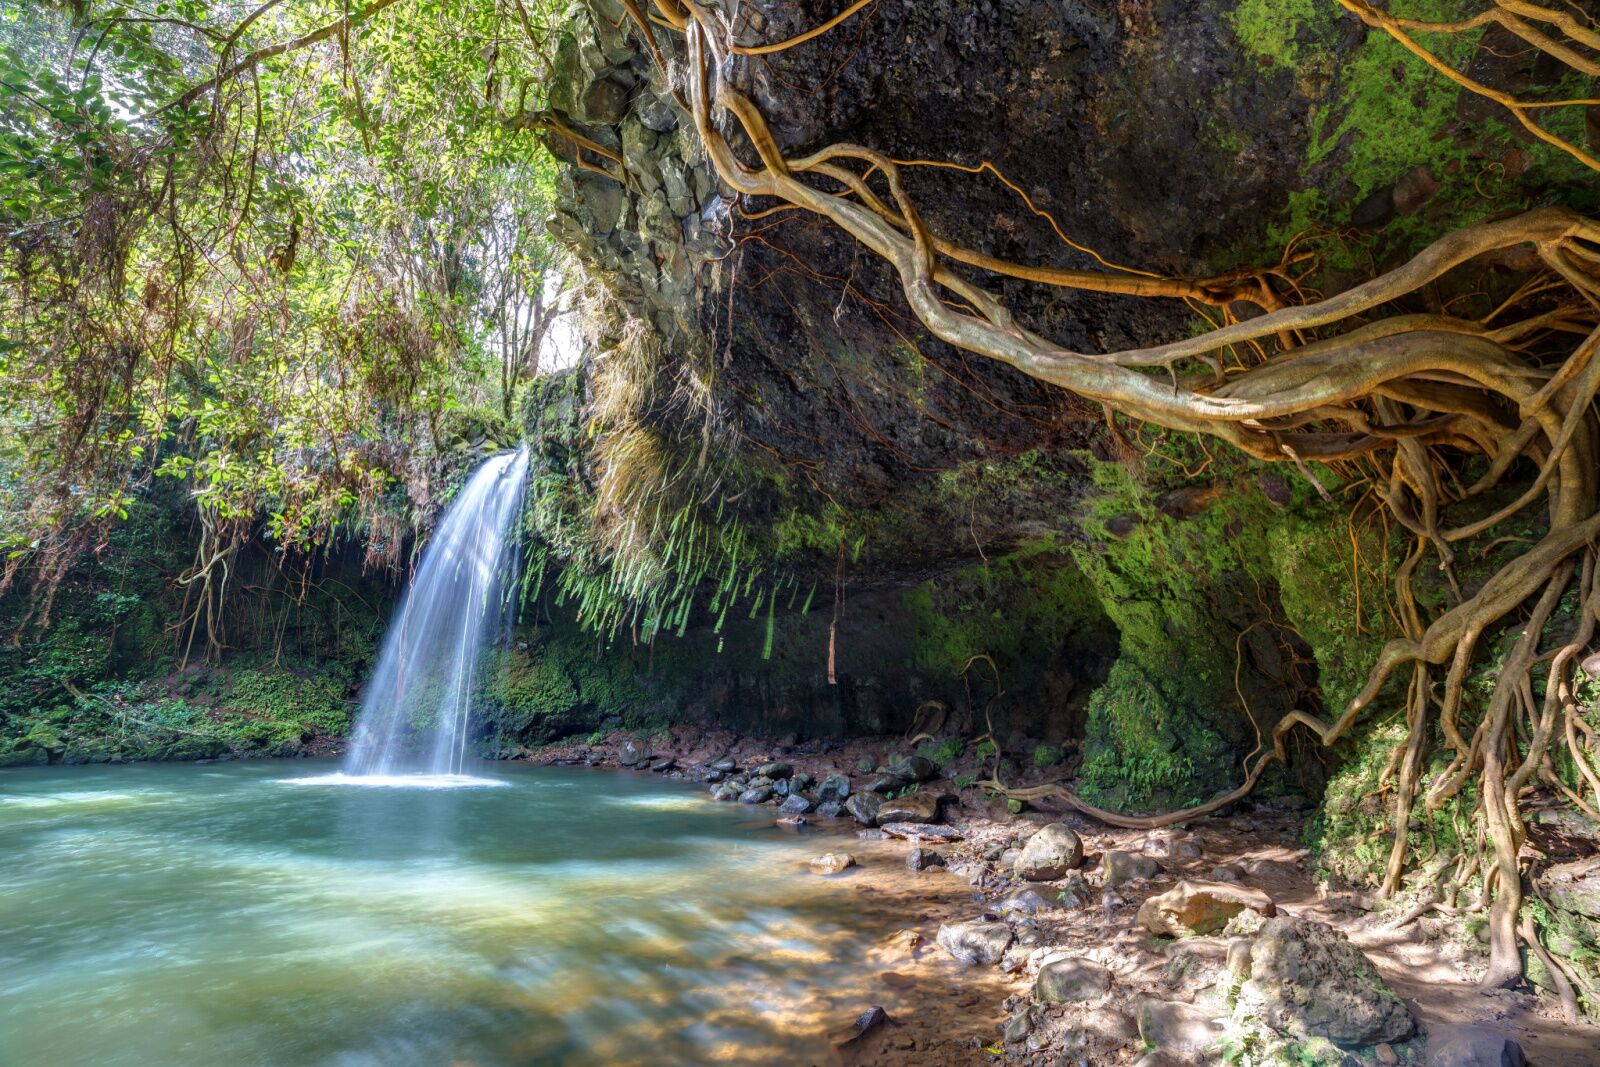 twin falls, a short hiking trail on hawaii's island of maui